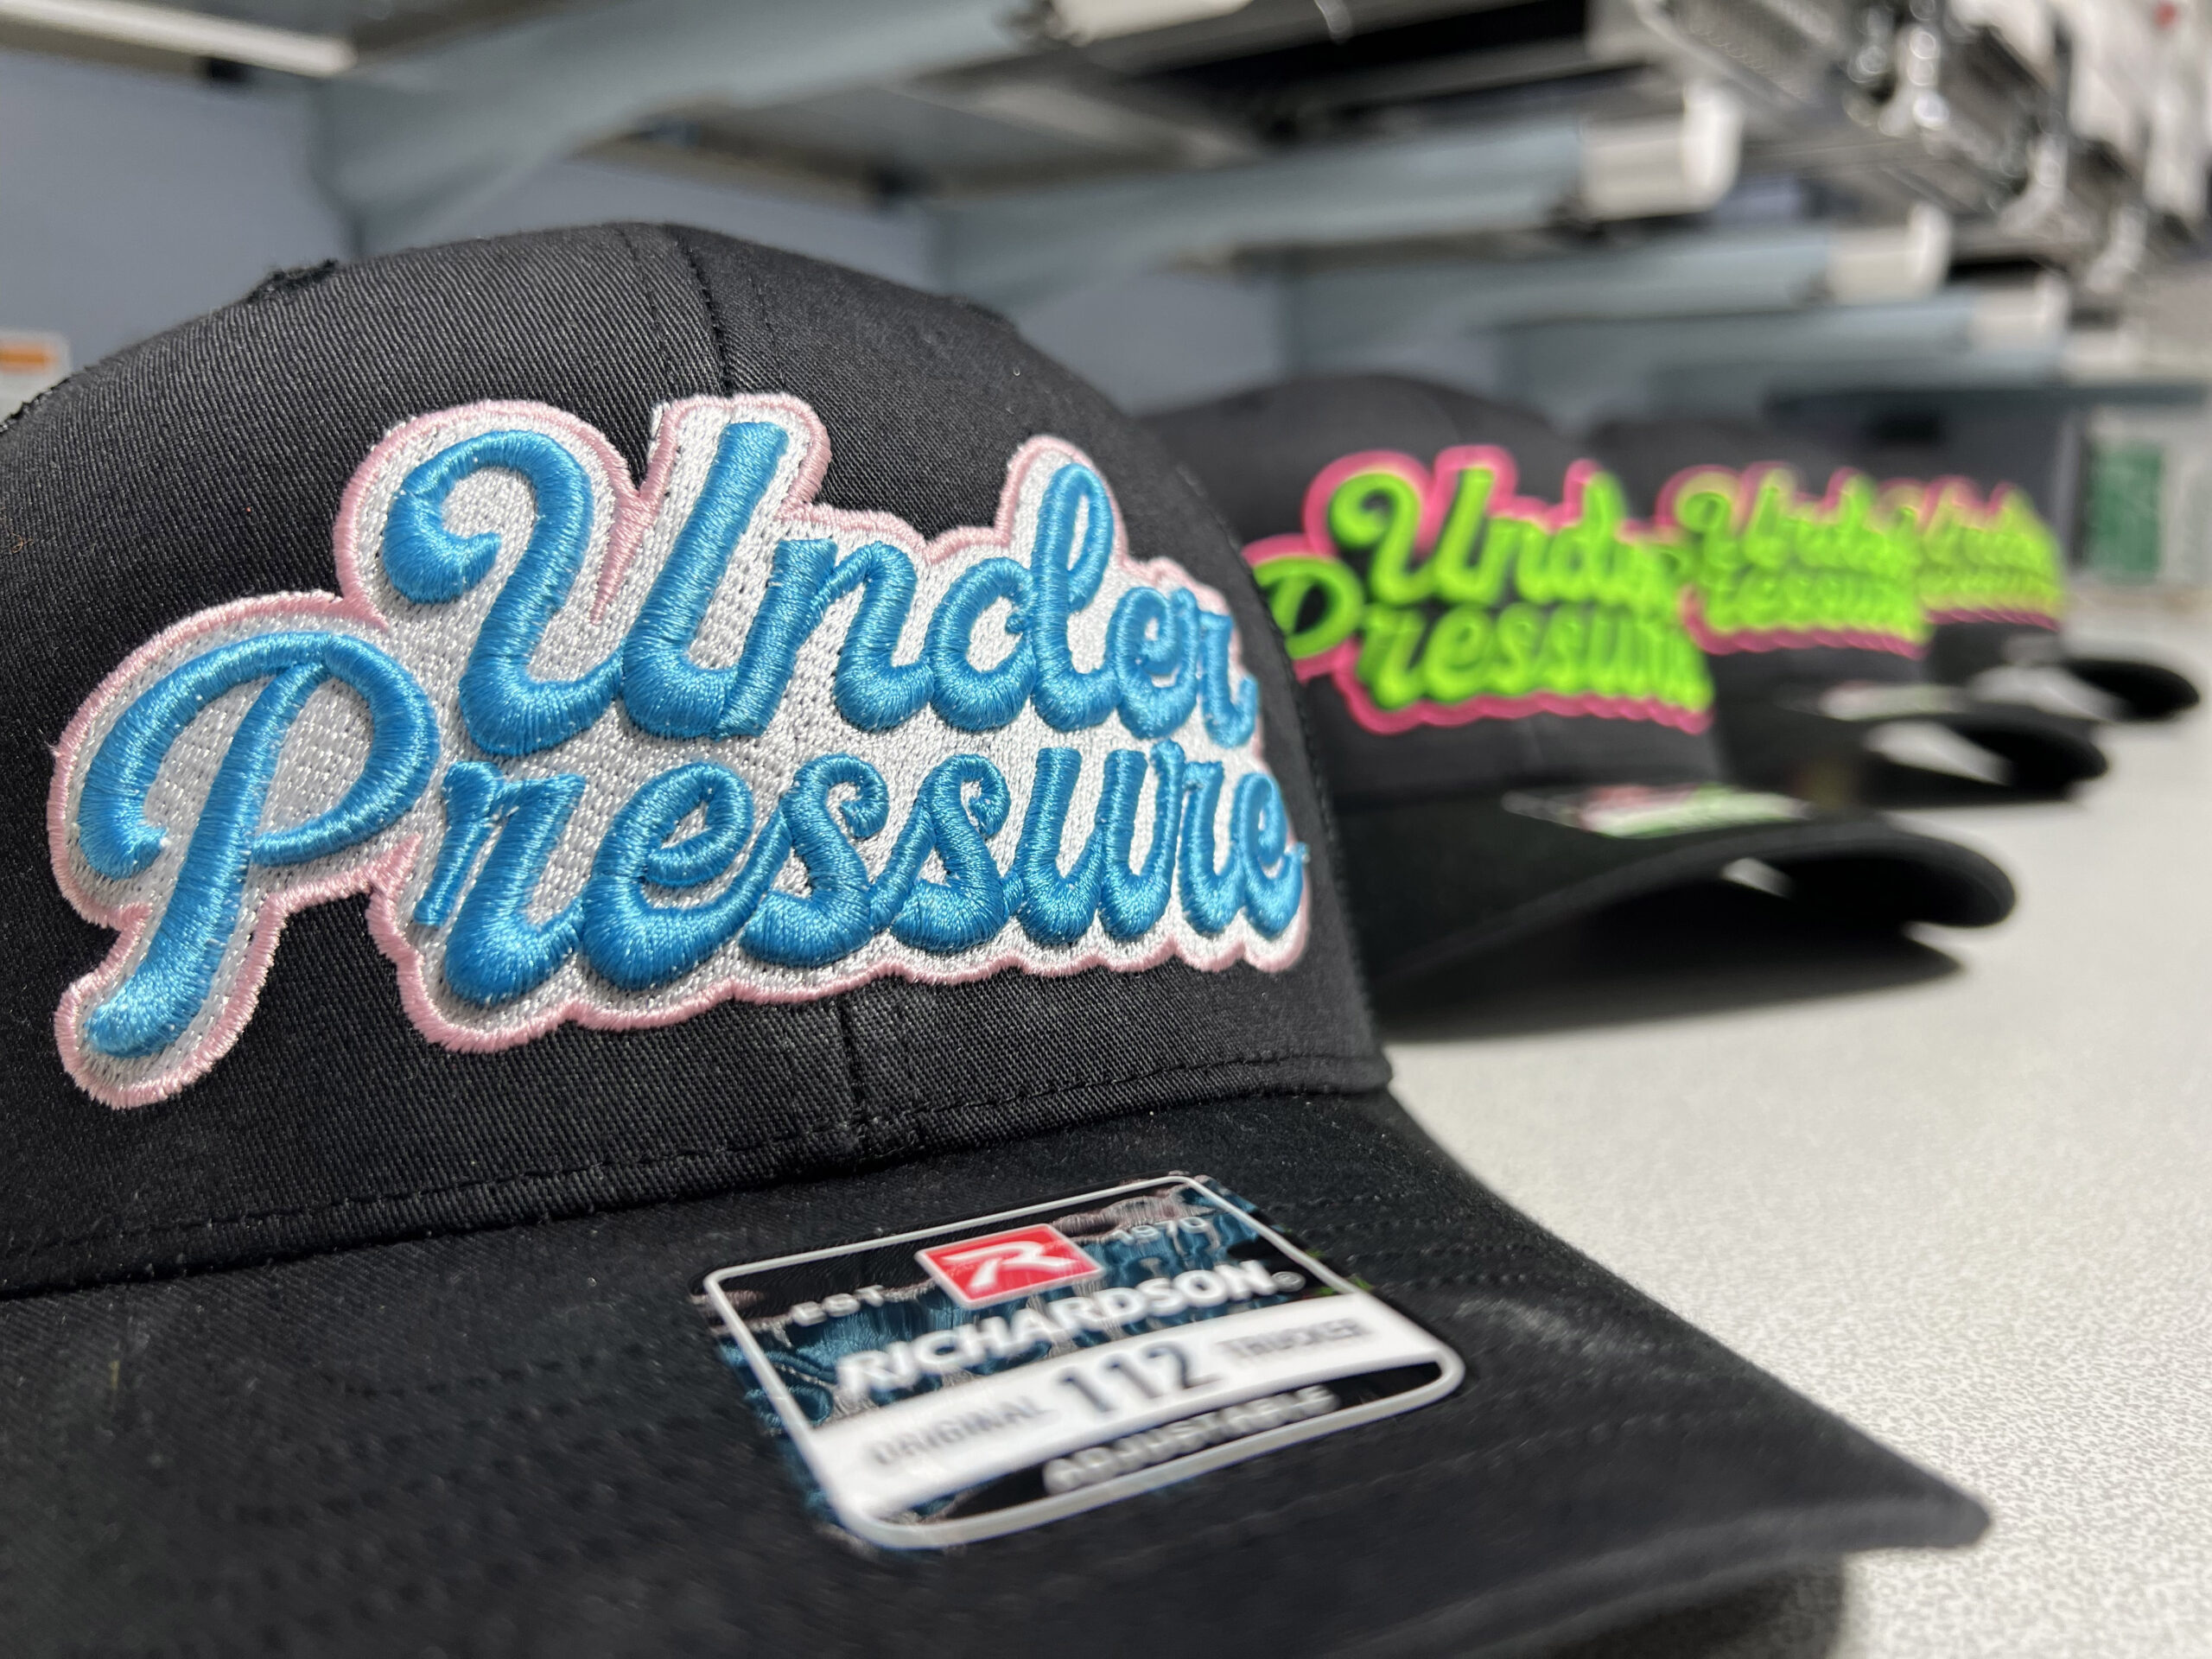 Under Pressure Print Shop embroidered logo hats